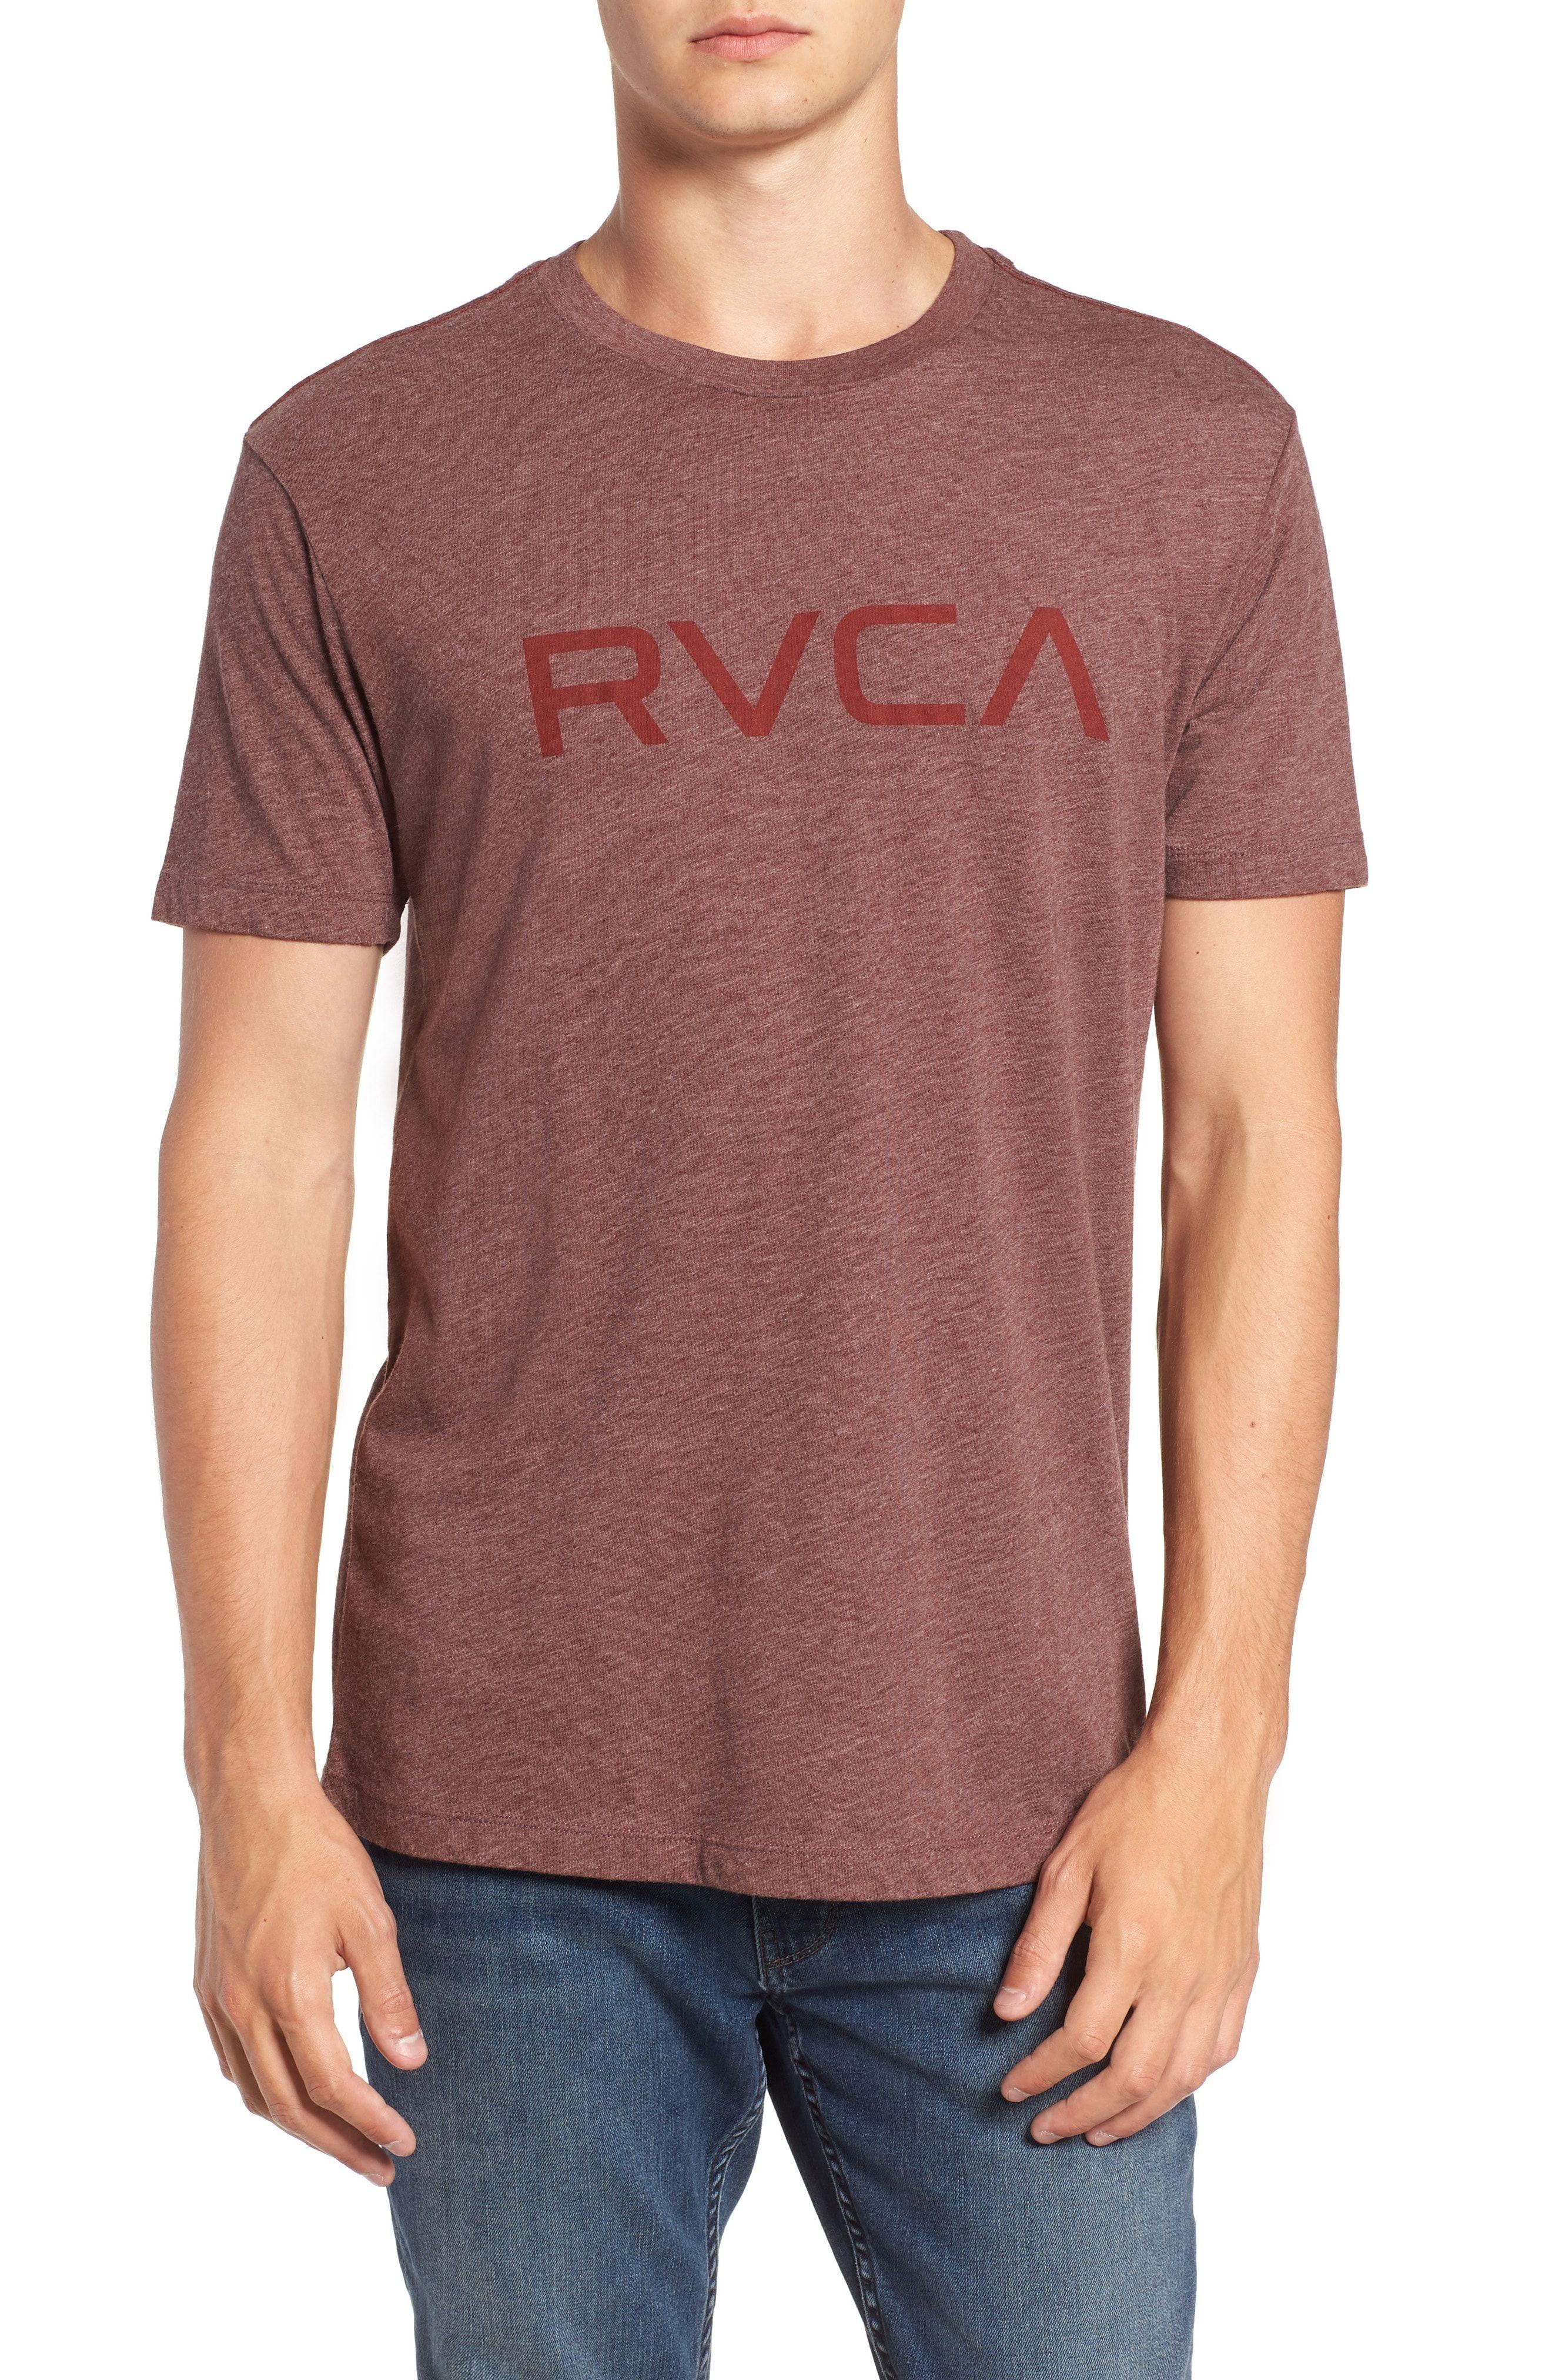 Red RVCA Logo - RVCA BIG LOGO T-SHIRT. #rvca #cloth | Rvca in 2018 | Pinterest | T ...